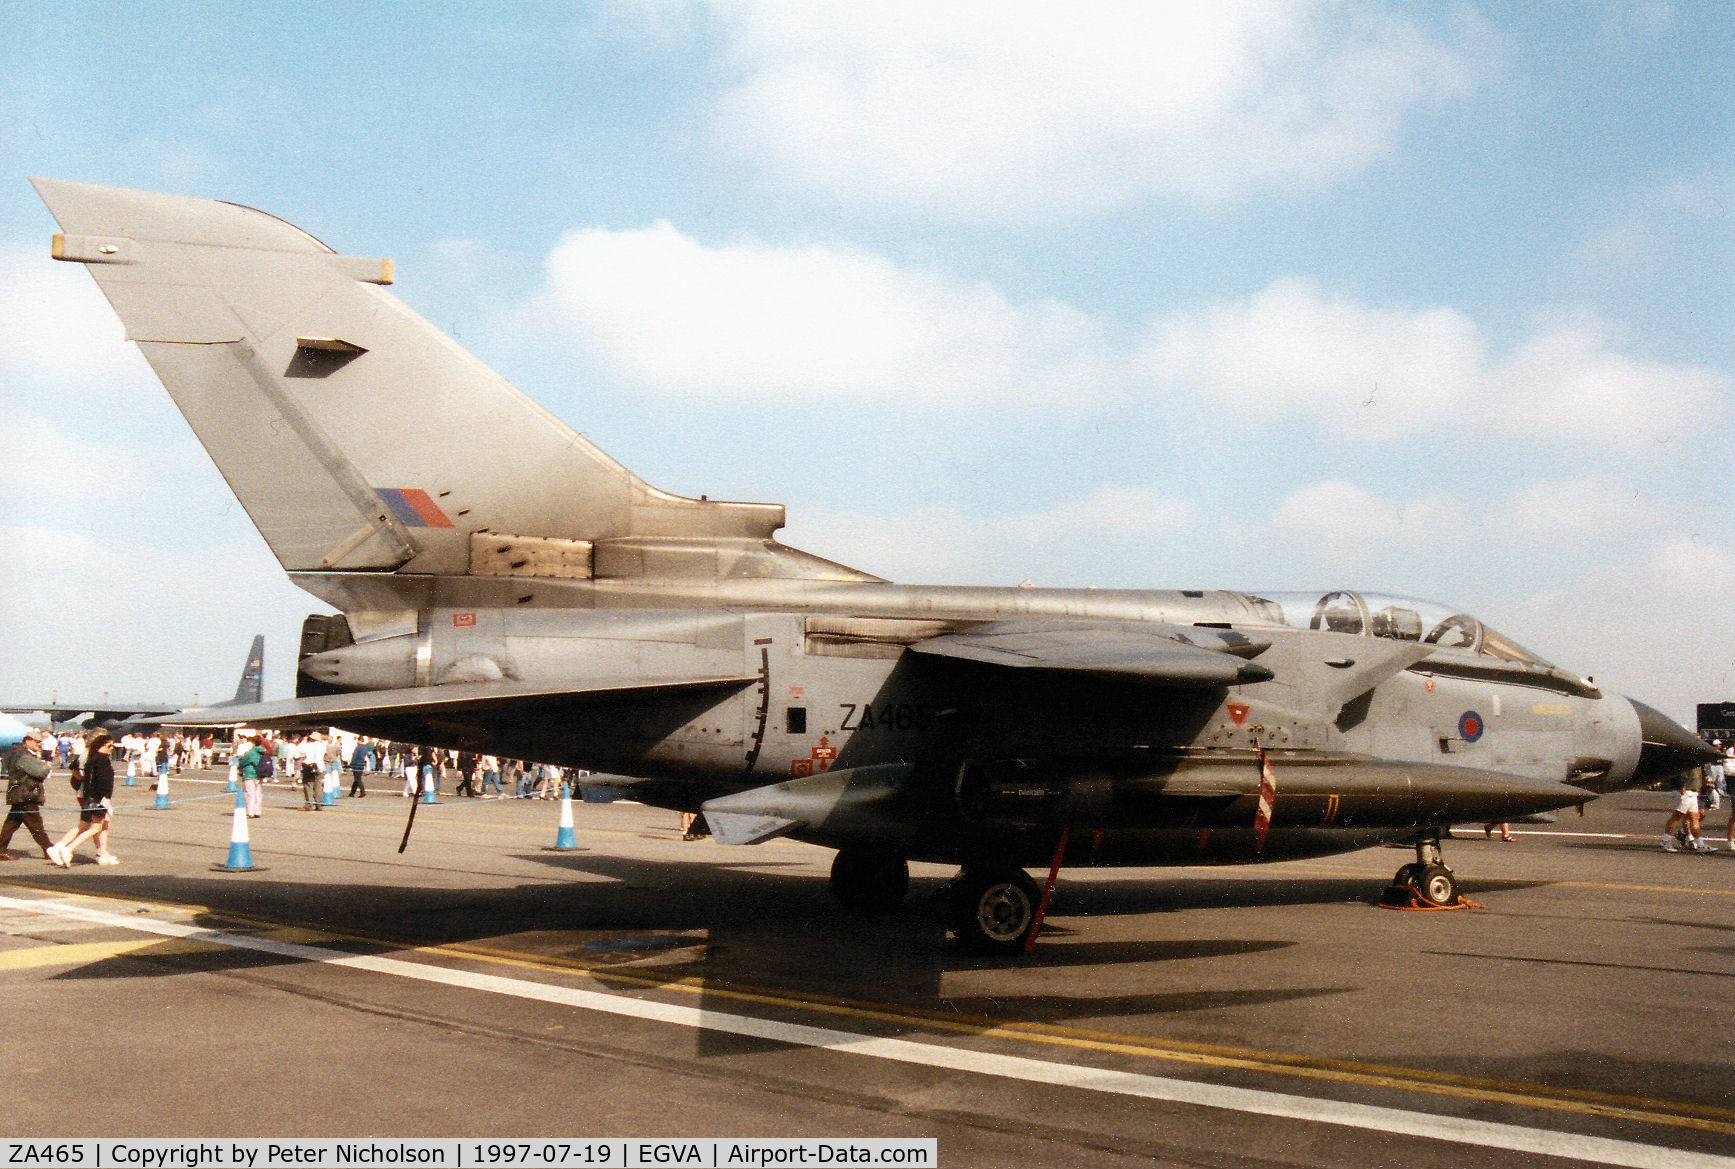 ZA465, 1983 Panavia Tornado GR.1B C/N 278/BS095/3131, Tornado GR.1B, callsign Wolf 1, of 12 Squadron at RAF Lossiemouth on display at the 1997 Intnl Air Tattoo at RAF Fairford.